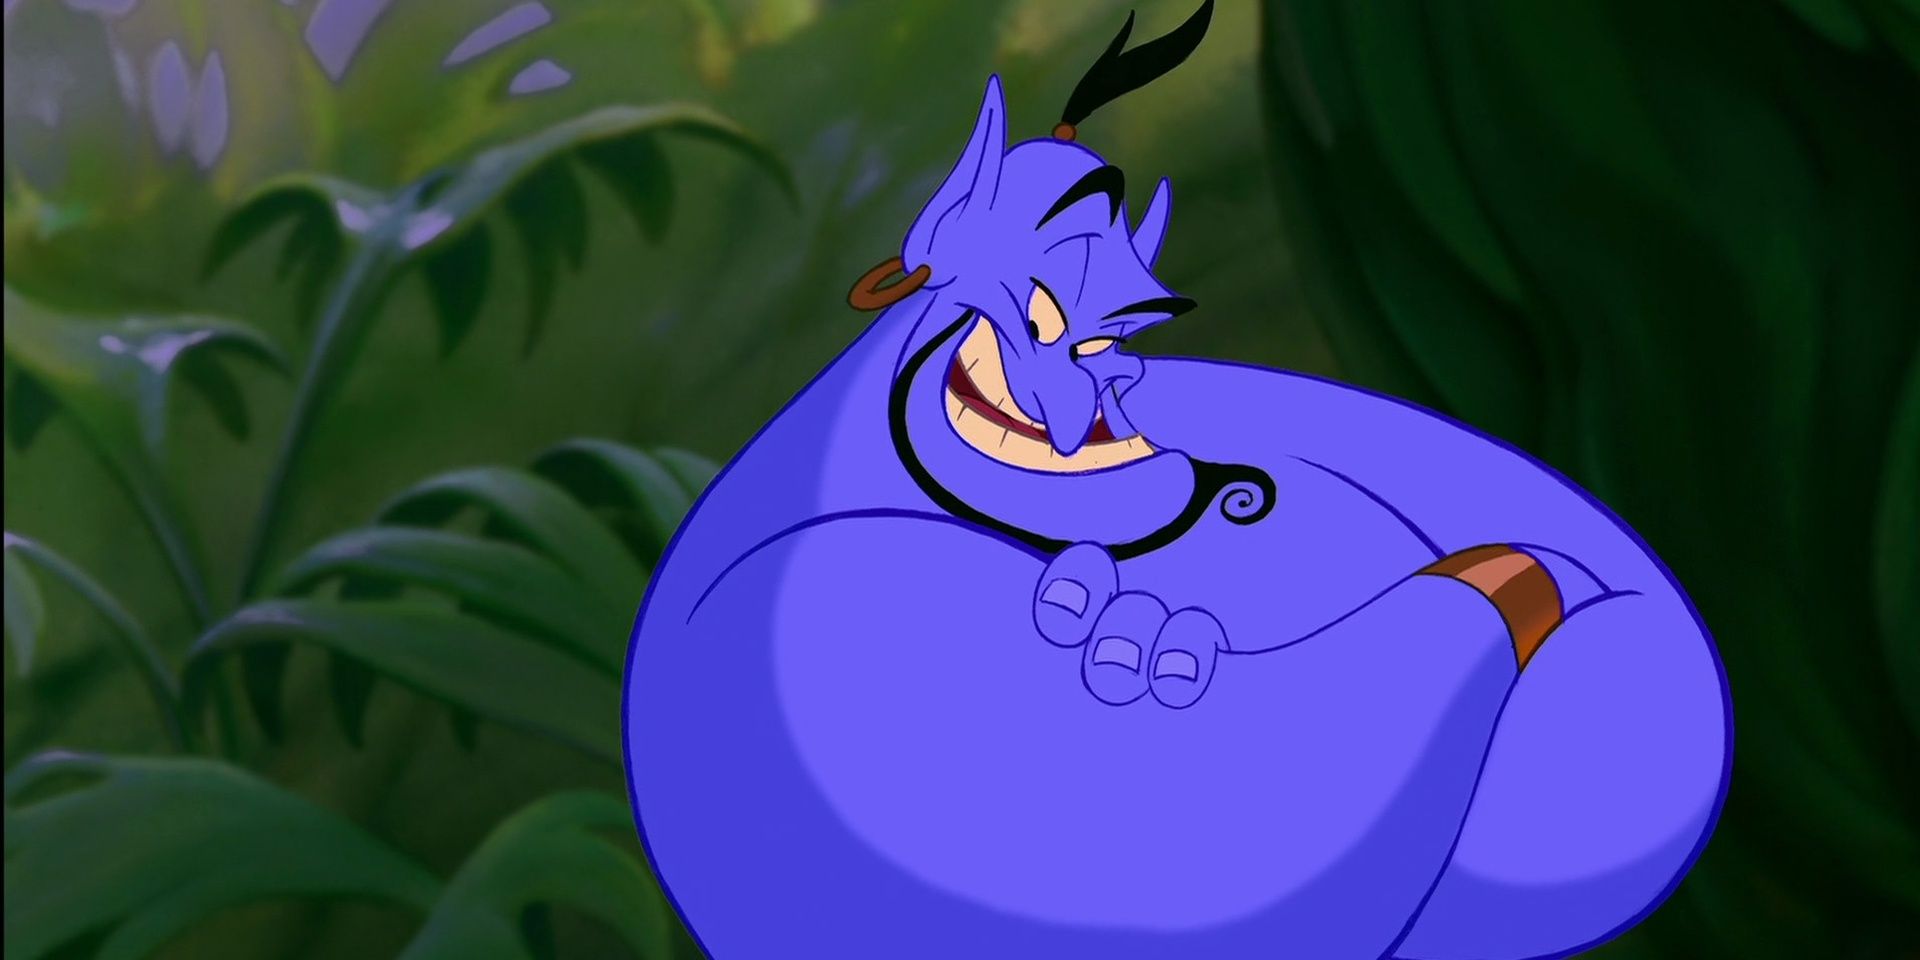 Genie from Aladdin in 1992.